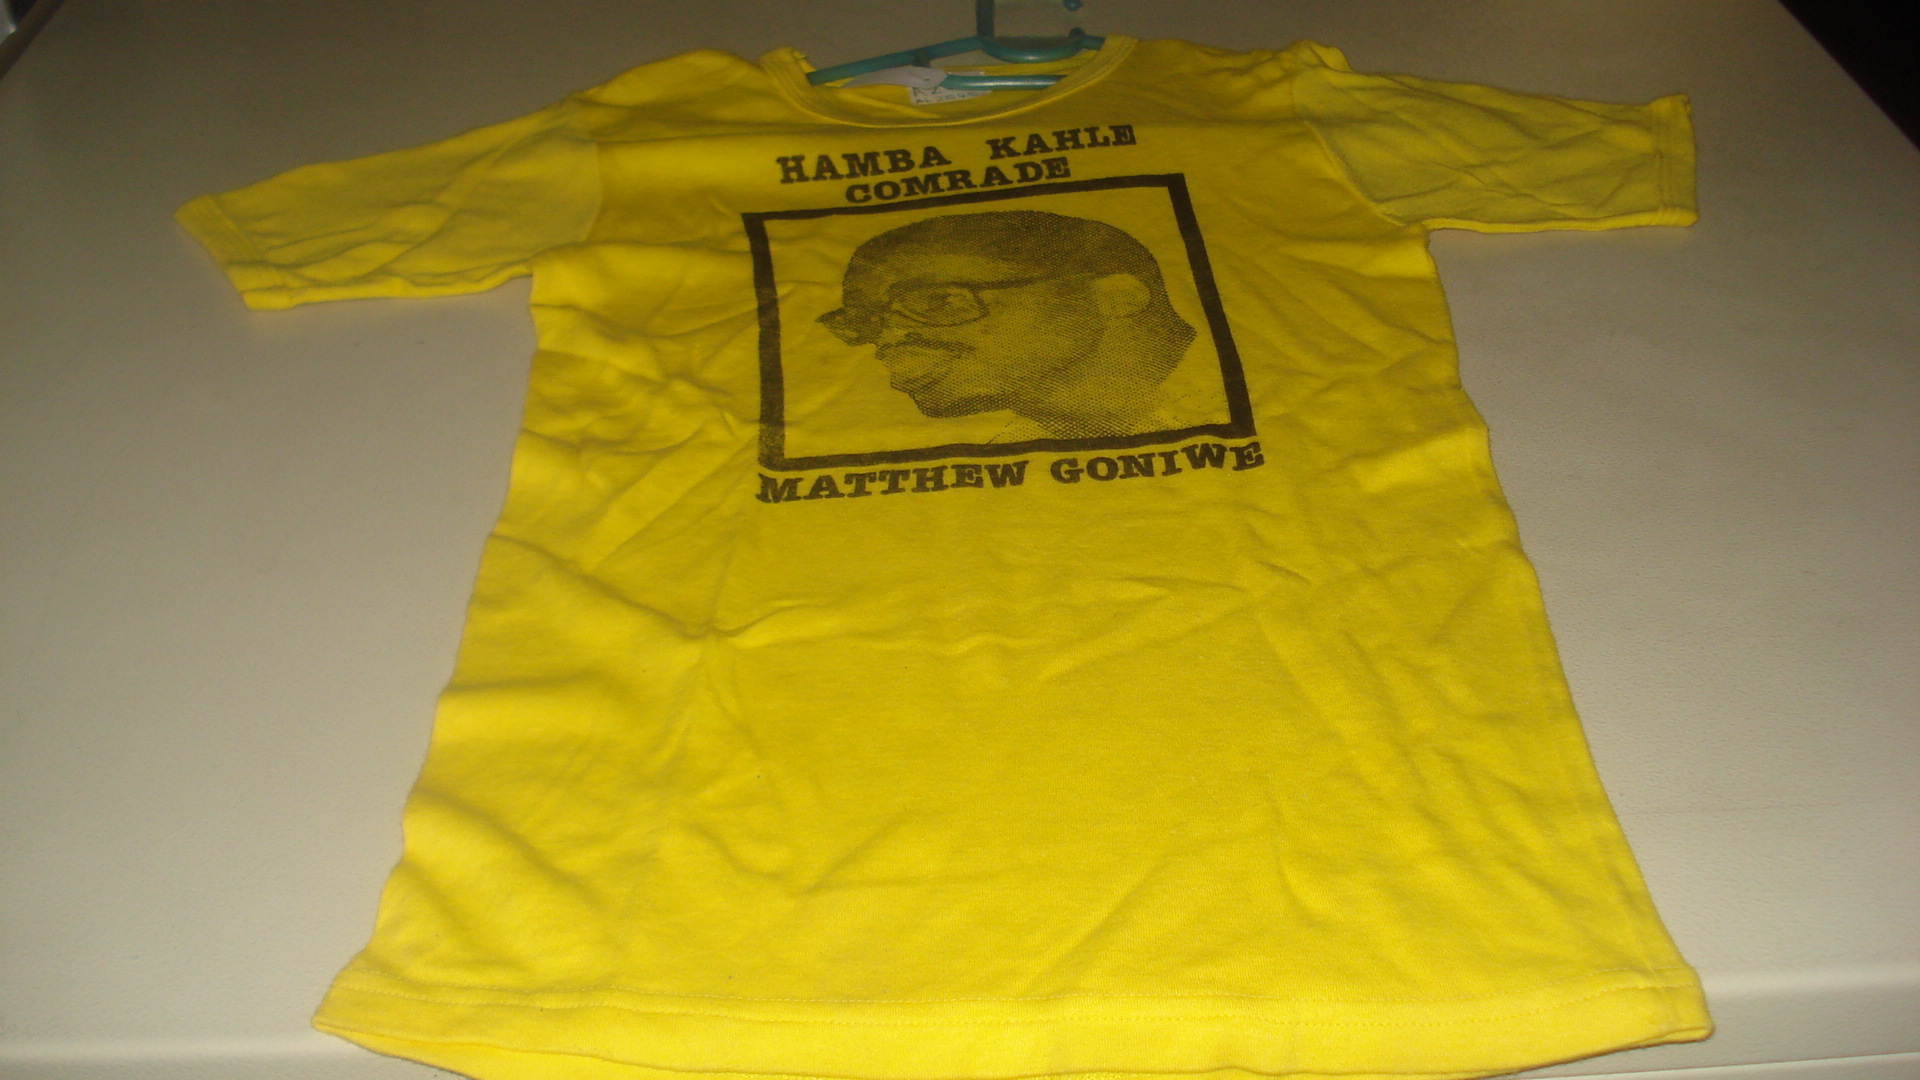 Hamba Kahle Comrade: Matthew Goniwe, T-shirt, SAHA Ephemera Collection, AL2540_A286